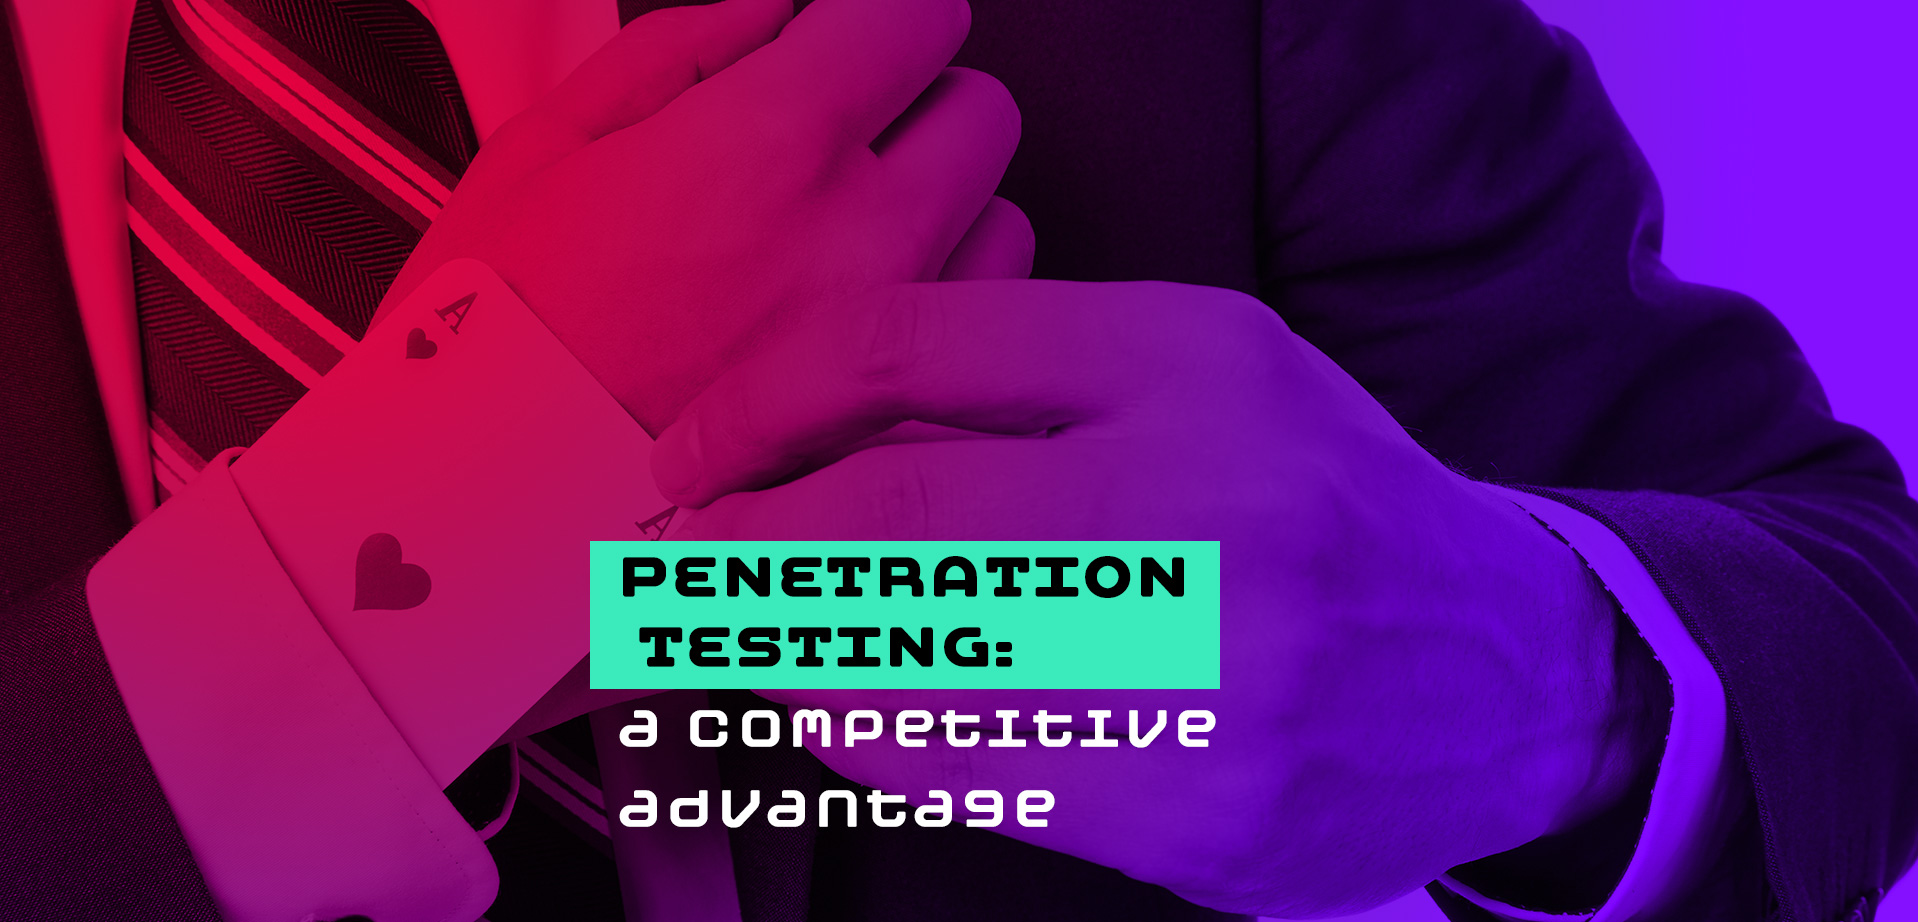 Penetration testing: a competitive advantage - Yack